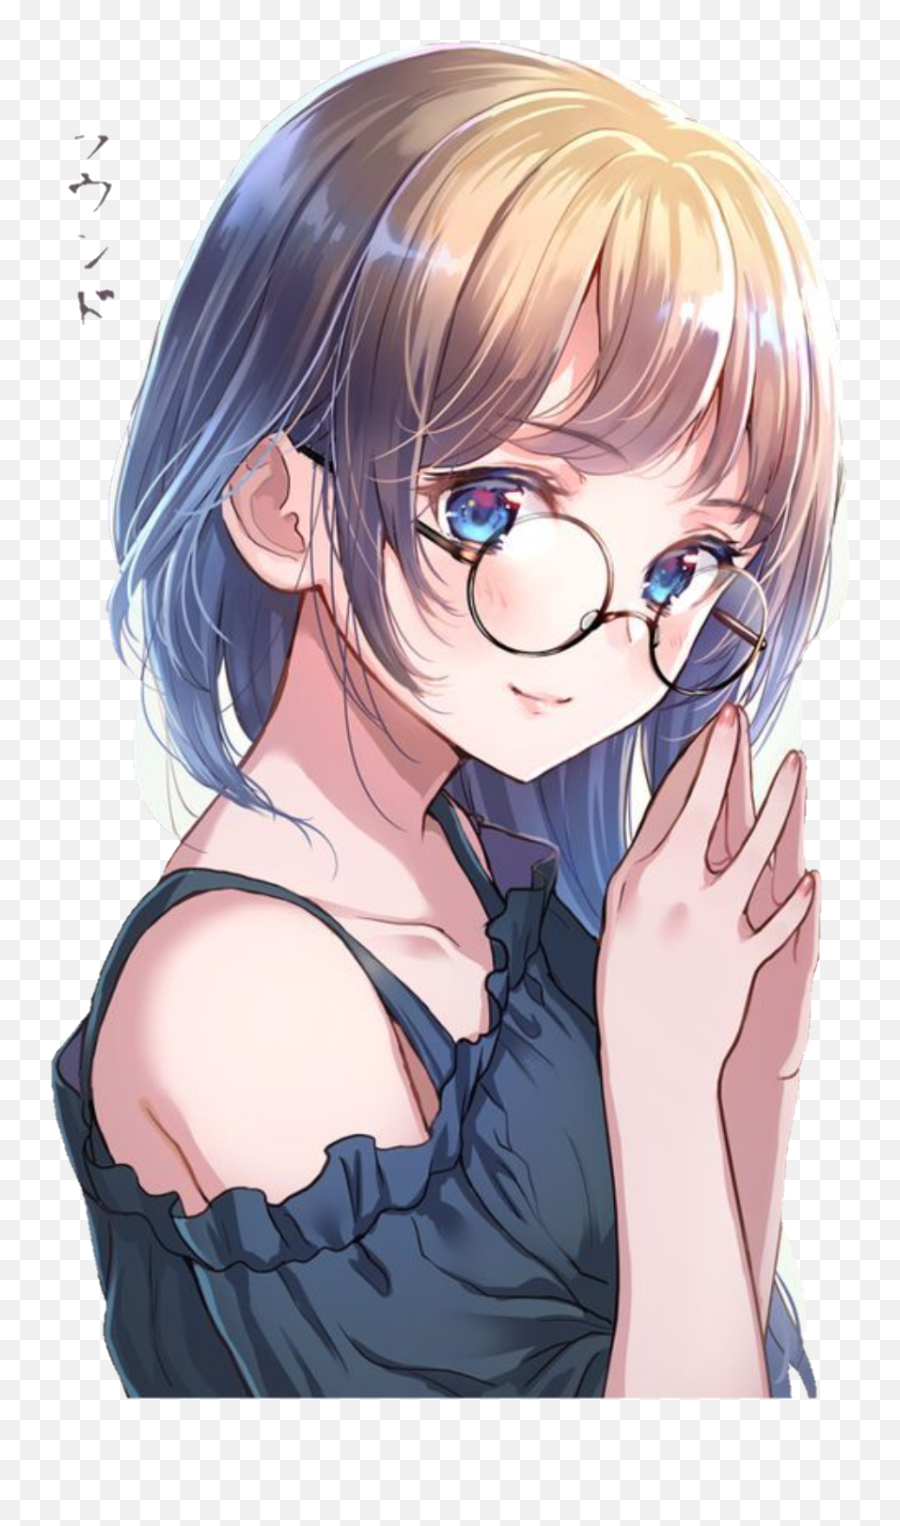 Girls Anime Just Girly Things - Cute Anime Girl With Glasses Emoji,Emoji Things For Girls